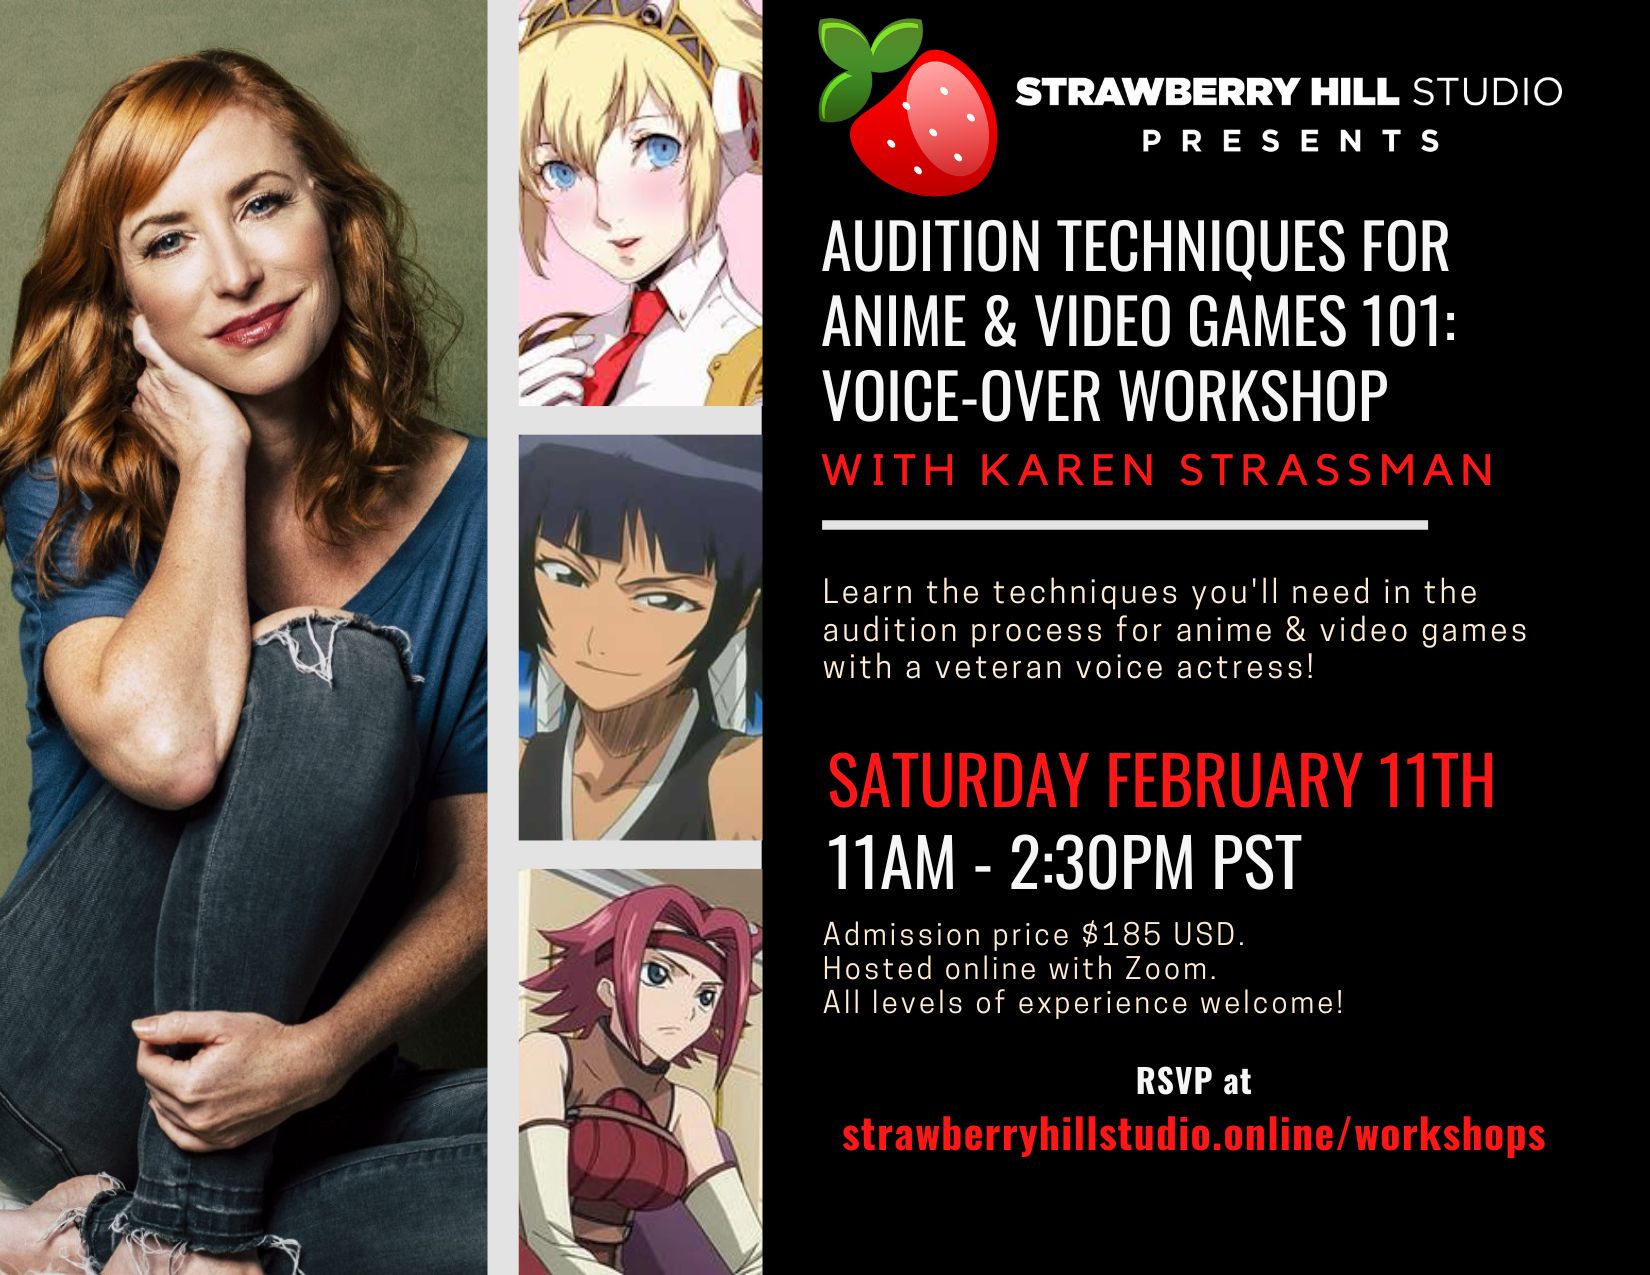 Audition Techniques for Anime & Video Games 101 - Voice-over Workshop w/ Karen Strassman